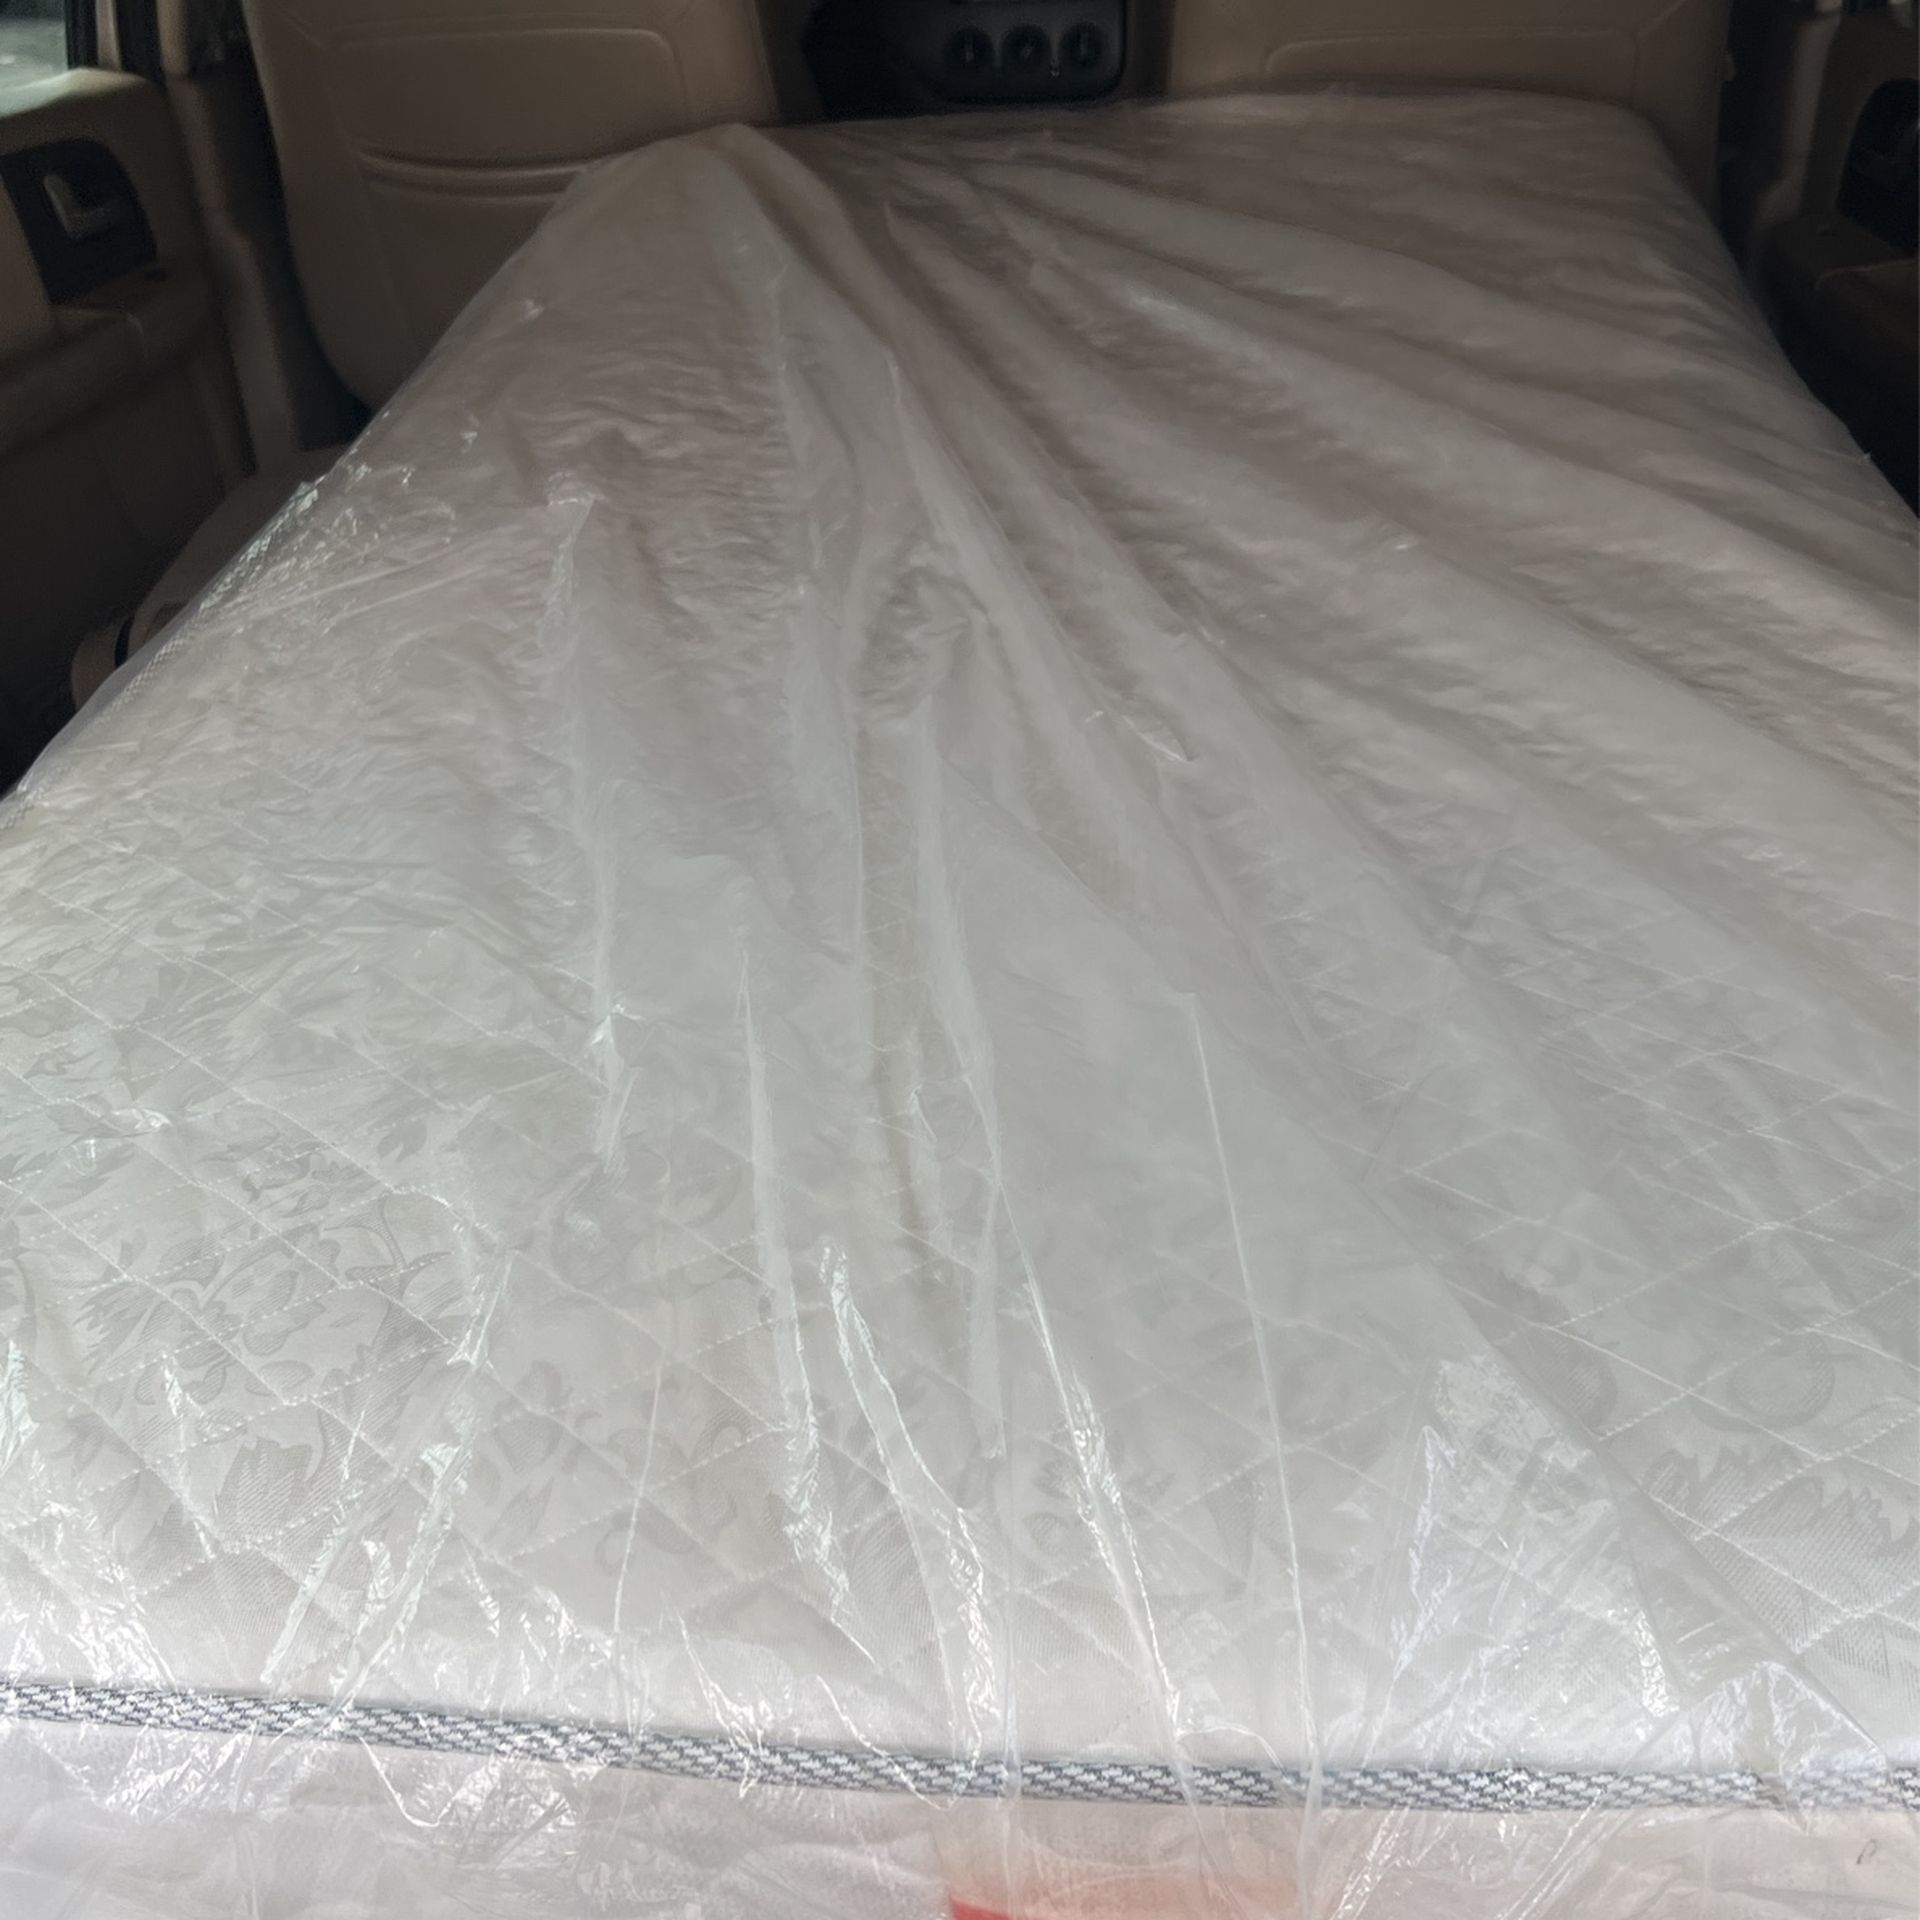 Twin bed mattress